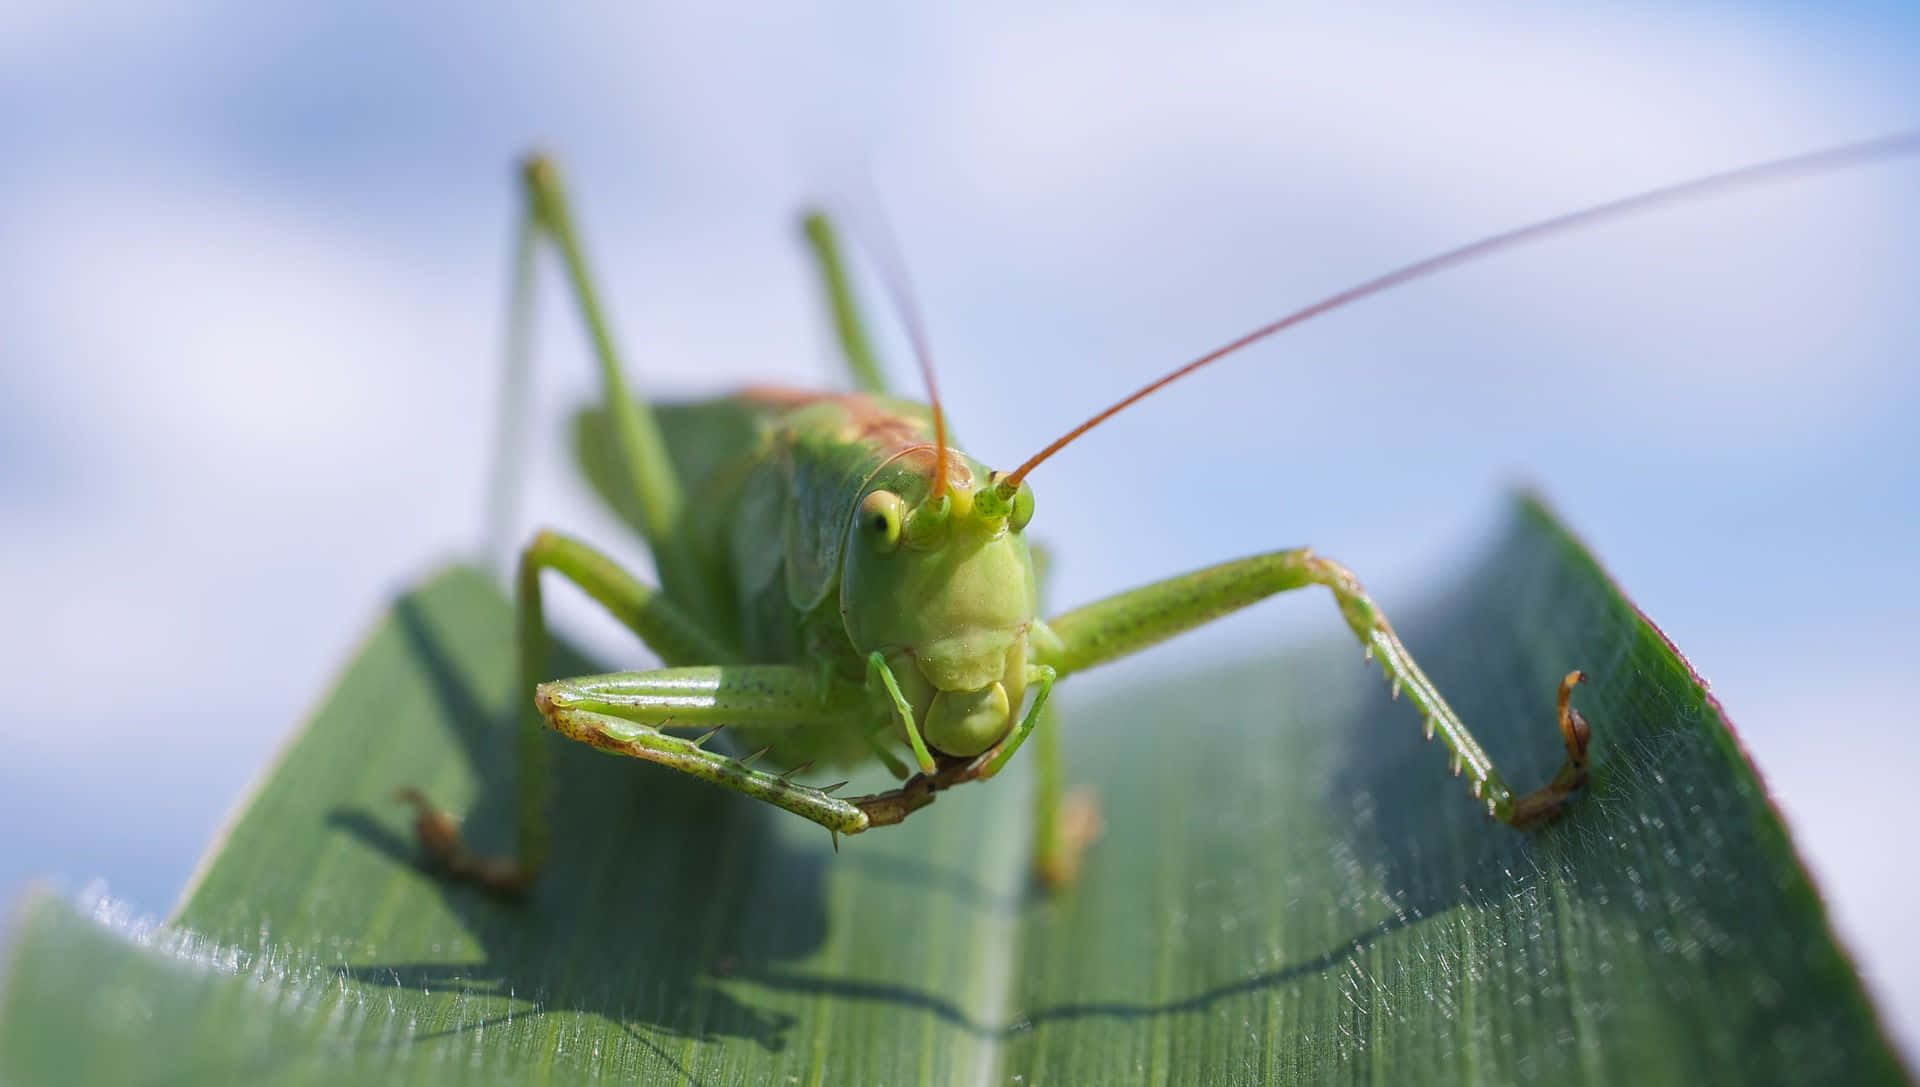 Graceful grasshopper perched on a green leaf